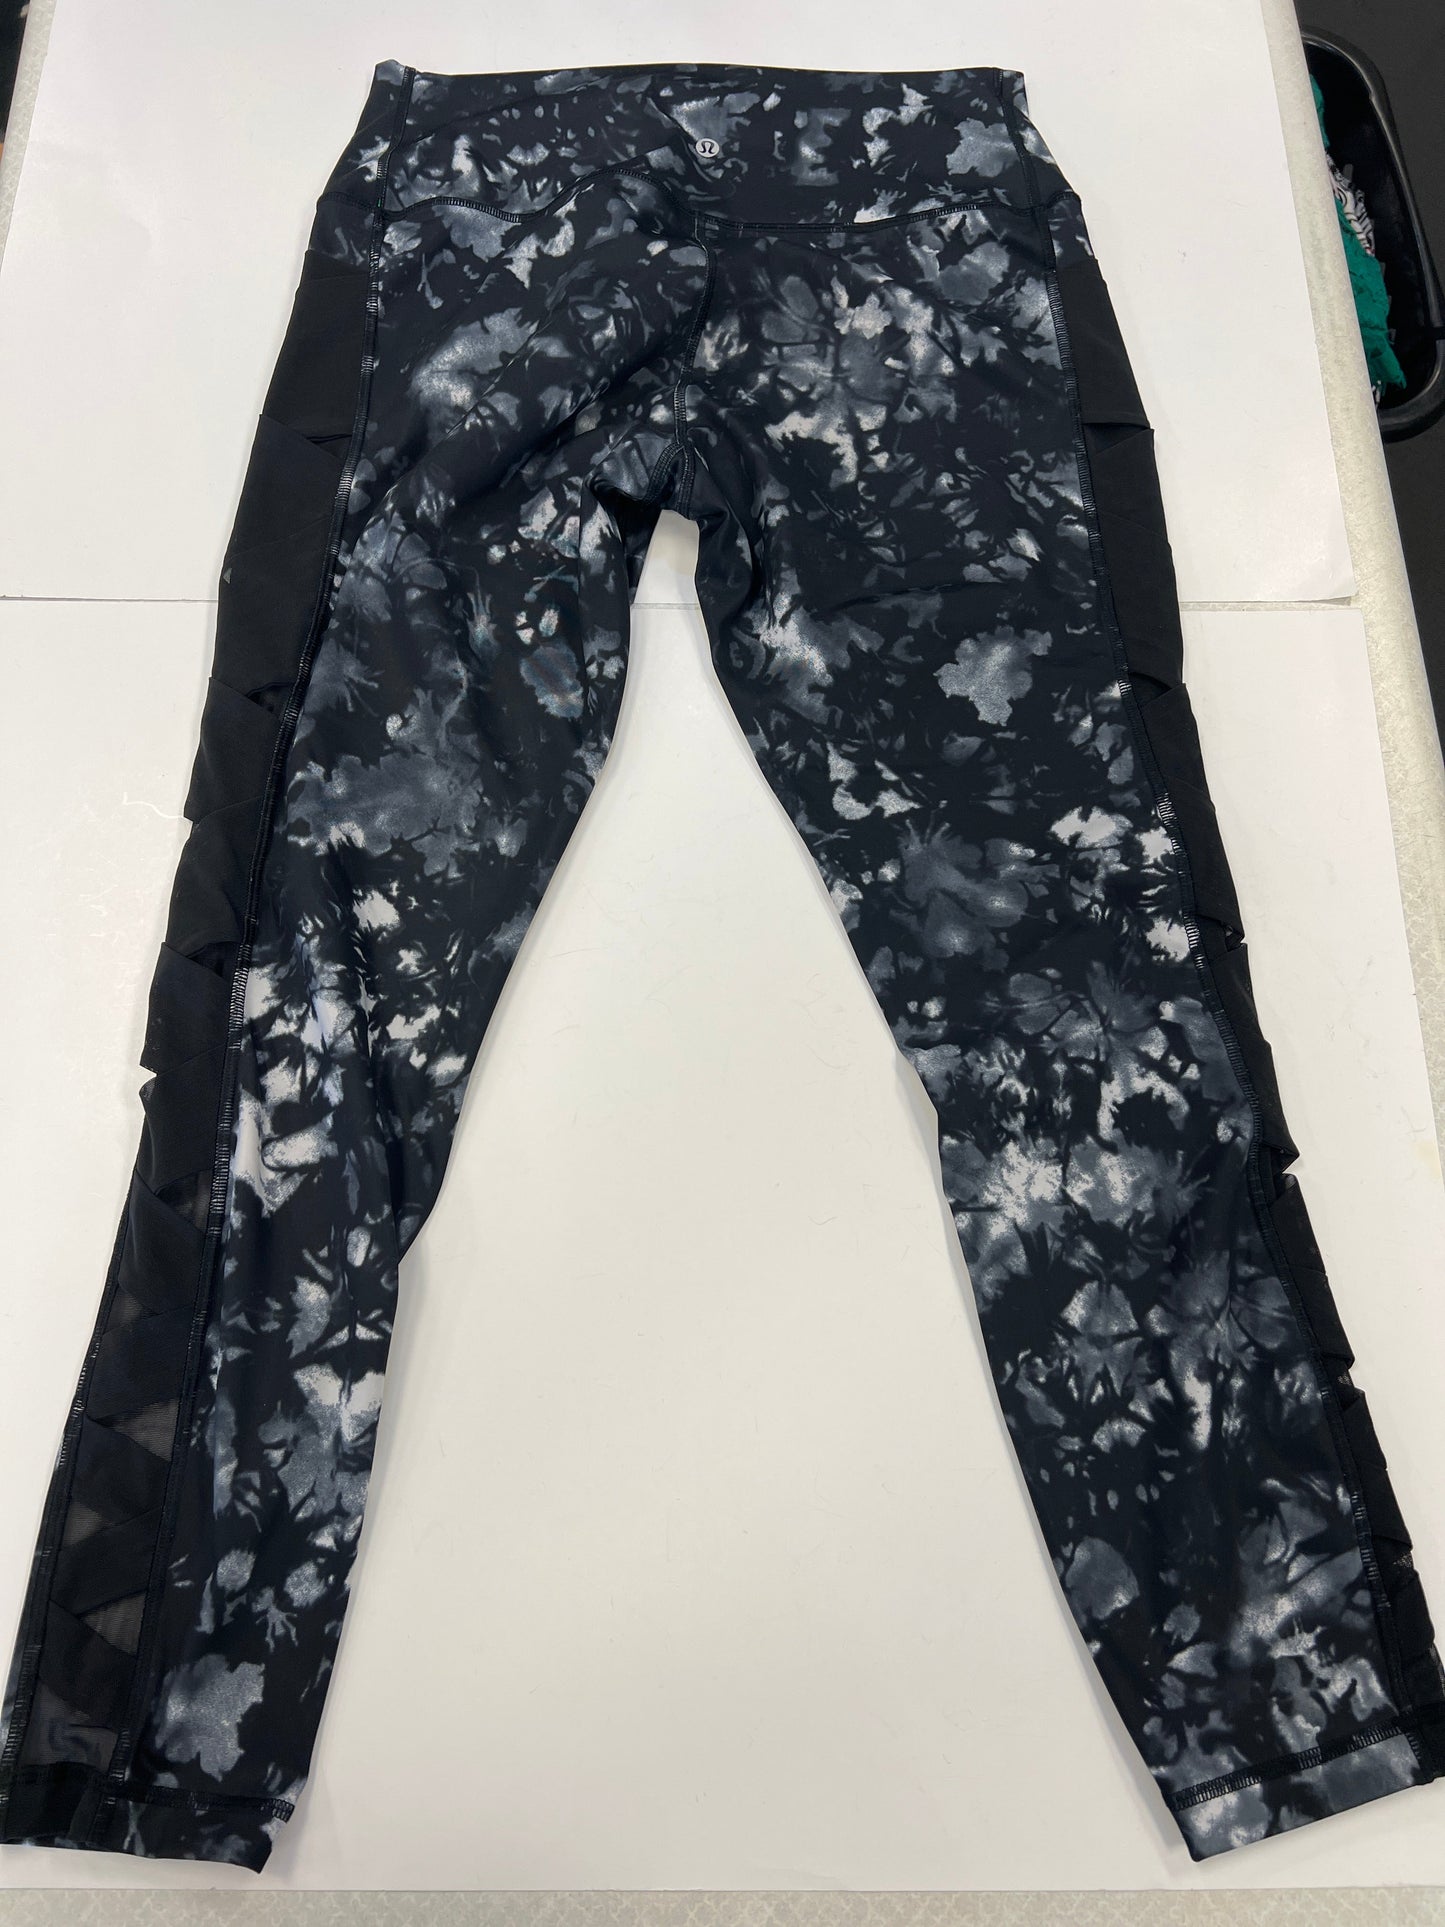 Black & Grey Athletic Pants Lululemon, Size L